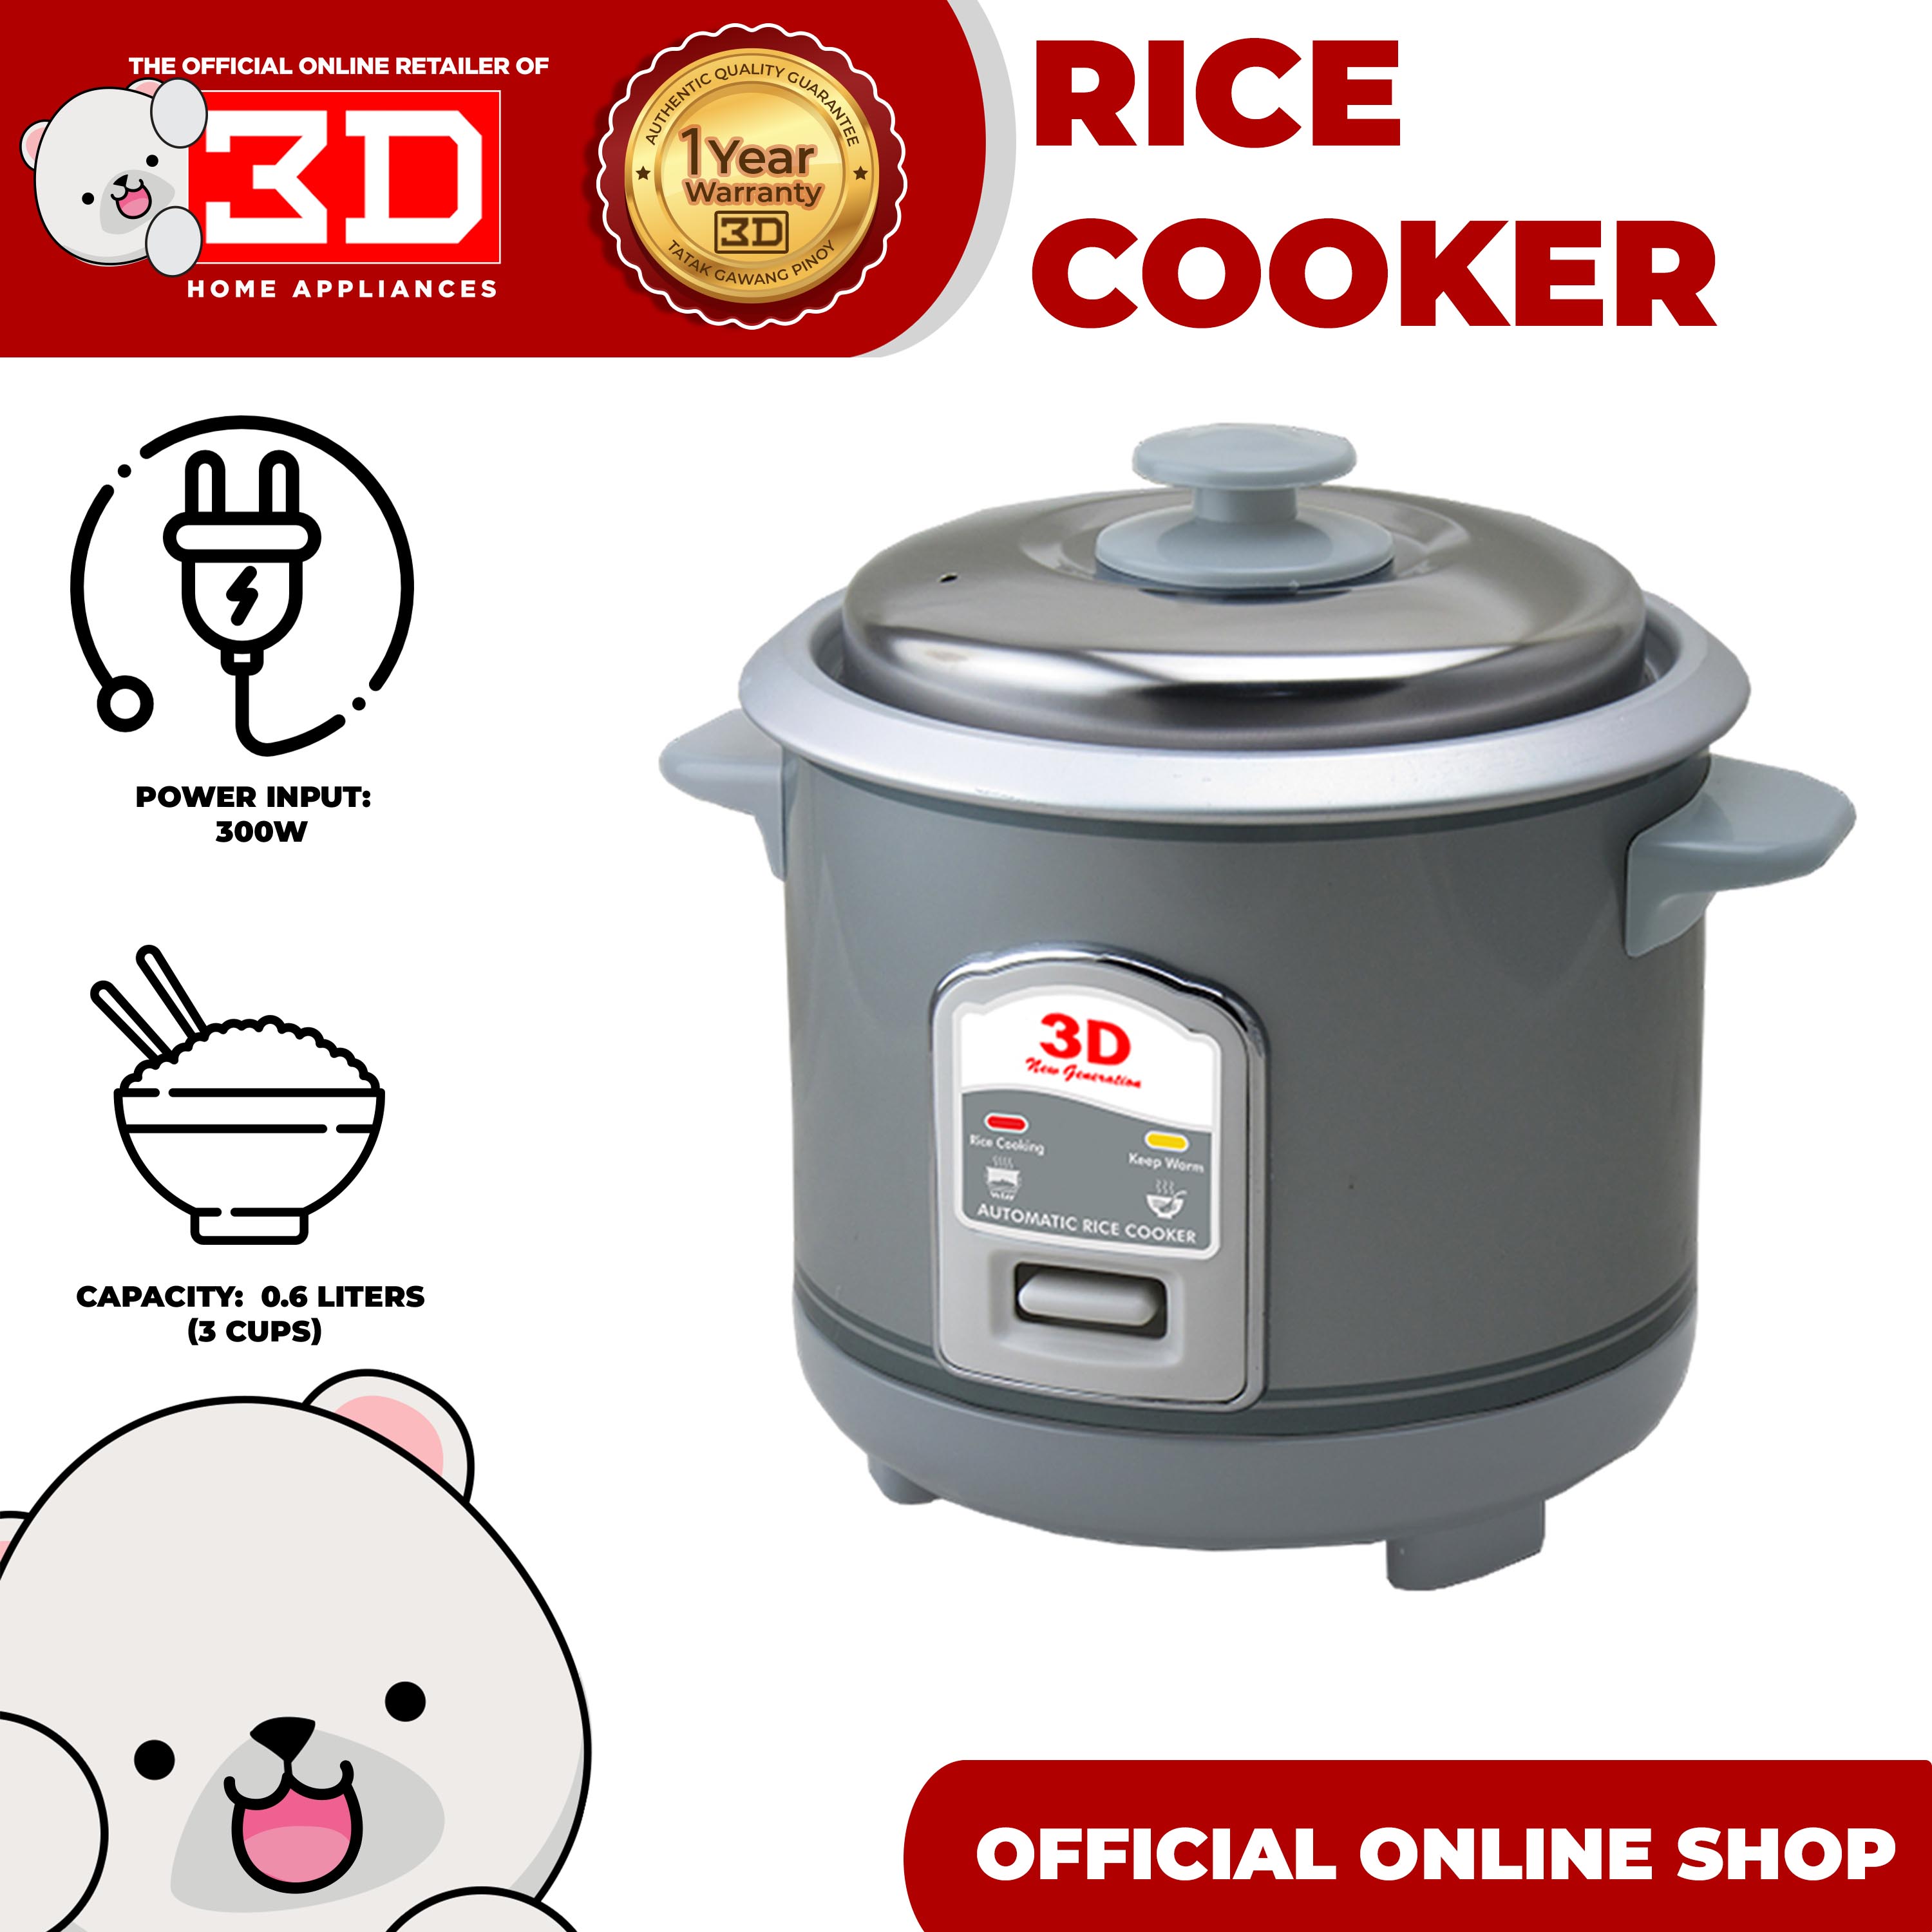 3D RC-3C 0.6 L Metallic Gray Rice Cooker